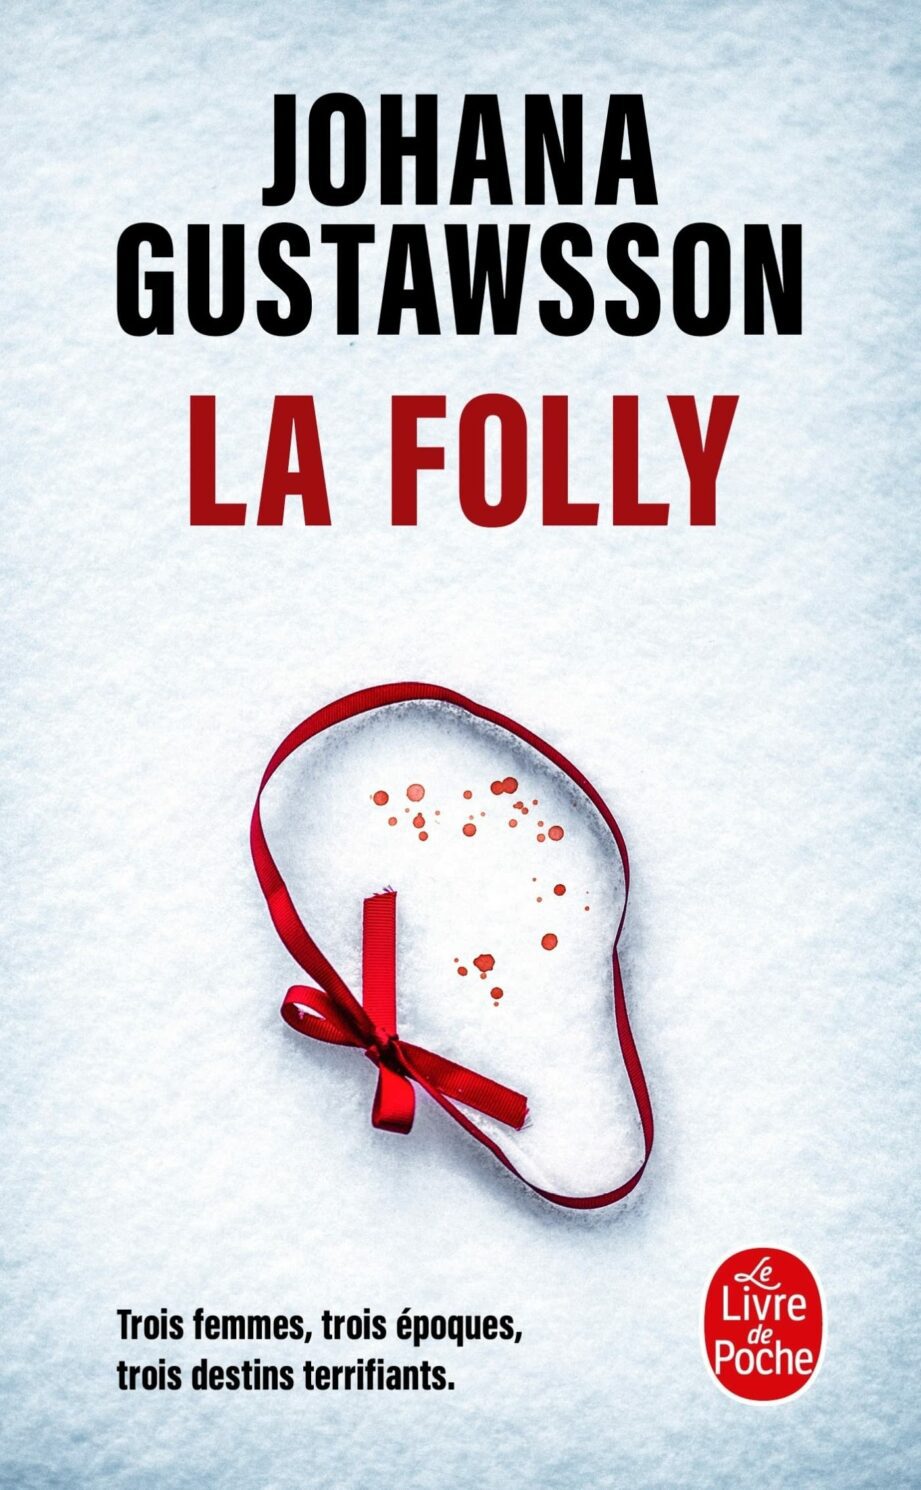 [Lecture] « La folly » : le dernier thriller de Johana Gustawsson